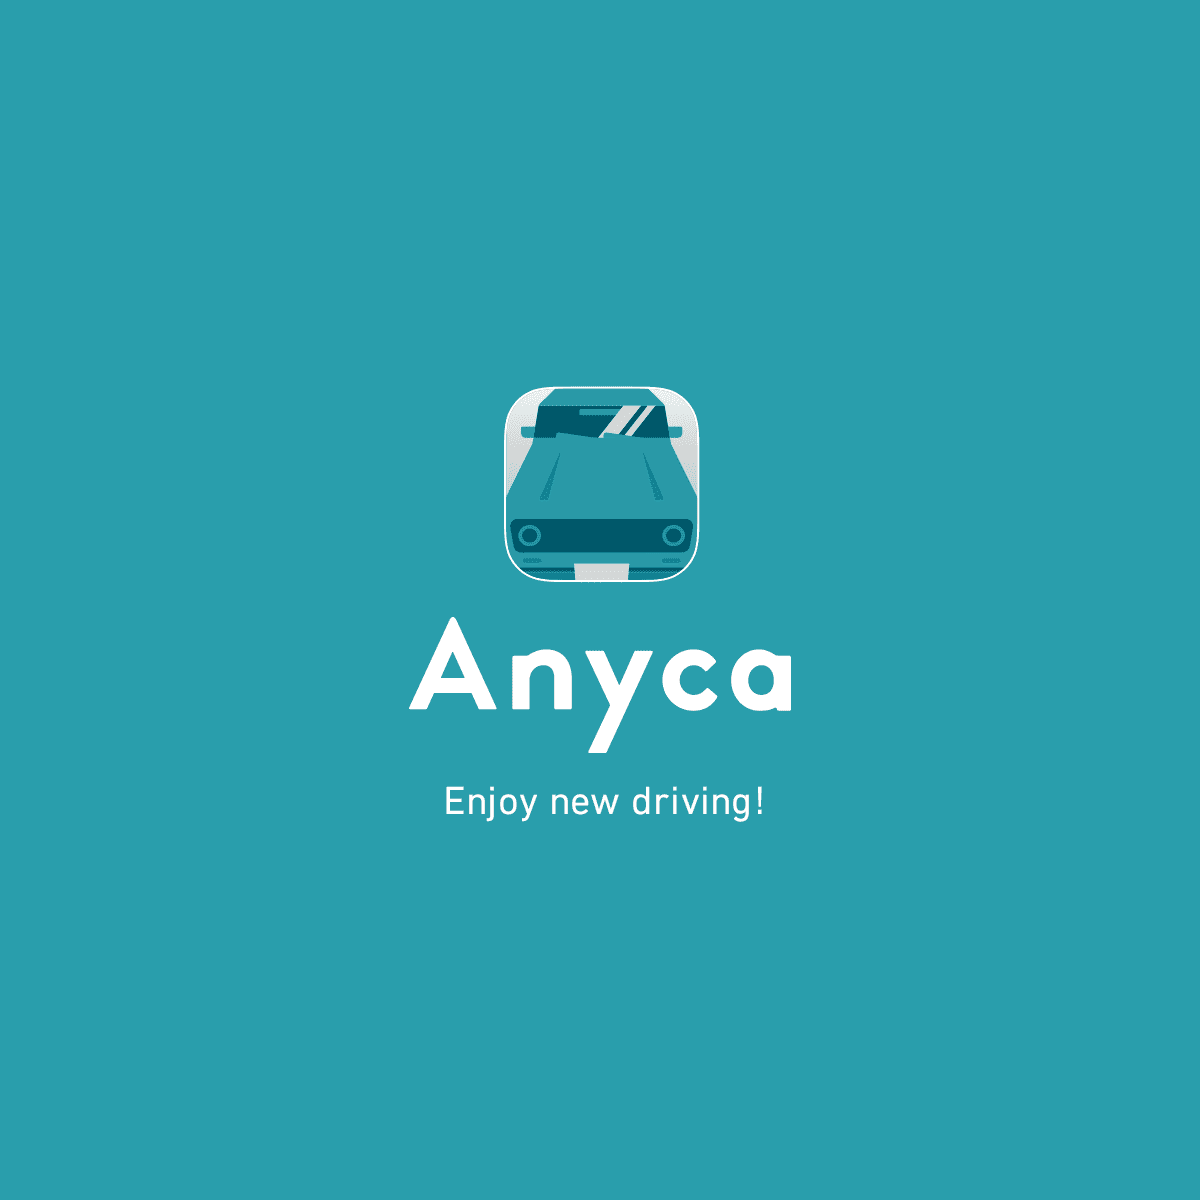 Anyca (エニカ) "乗ってみたい"に出会えるカーシェアリングアプリ